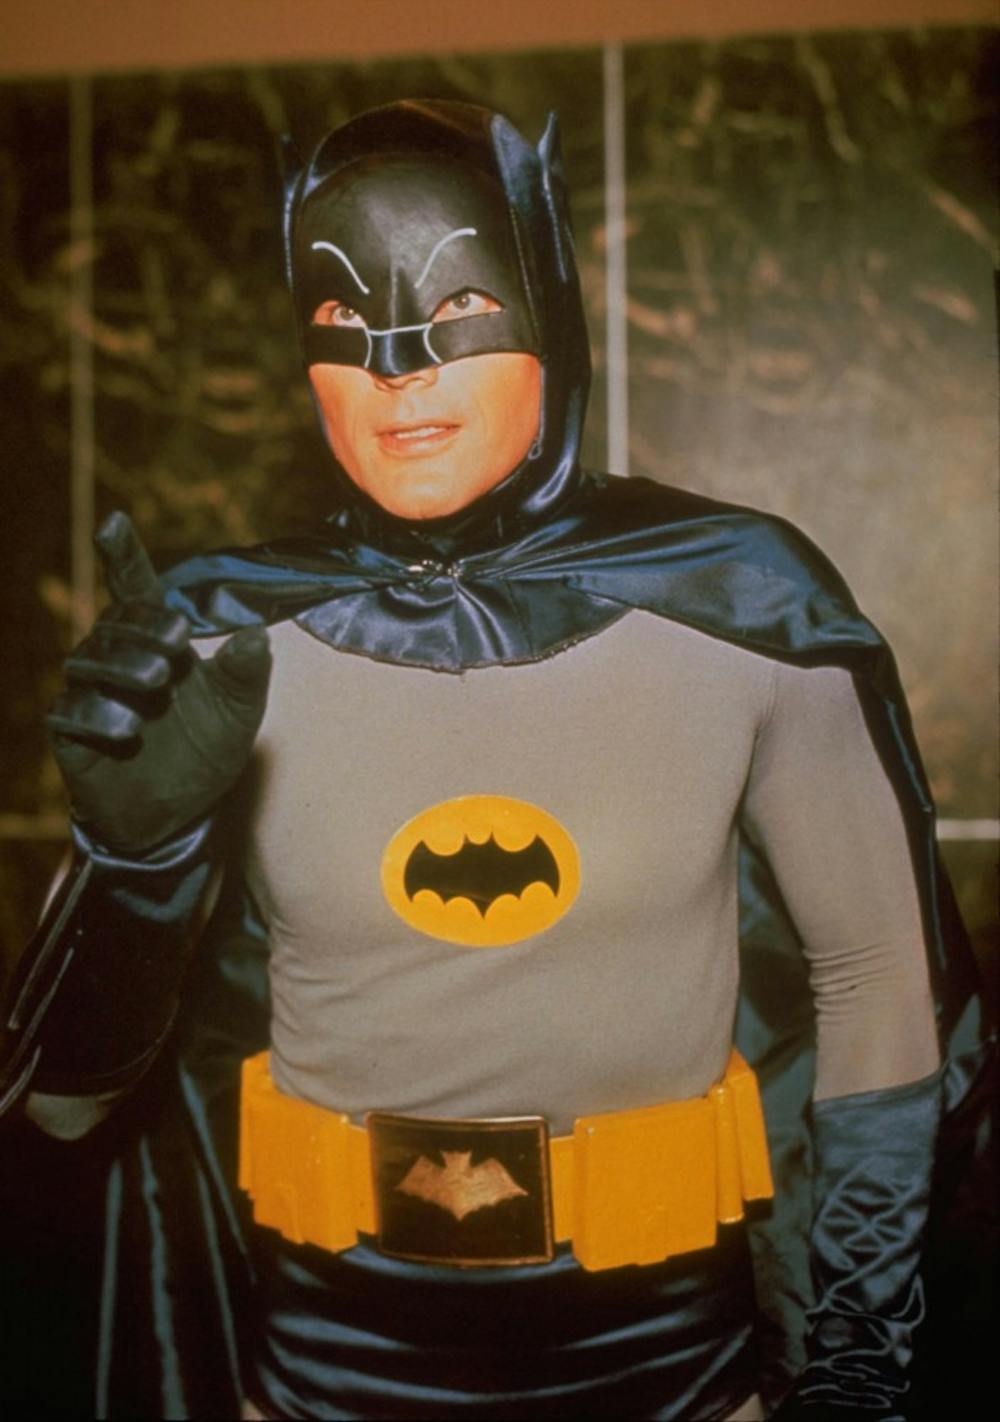 KRT ENTERTAINMENT STORY SLUGGED: BATMAN KRT PHOTOGRAPH VIA HANDOUT (April 22) Beginning April 29, 2002, TV Land will begin a special marathon of "Batman" episodes that will showcase the acting talents of Adam West as Batman. (KRT) NC KD 2002 (Vert) (smd) 